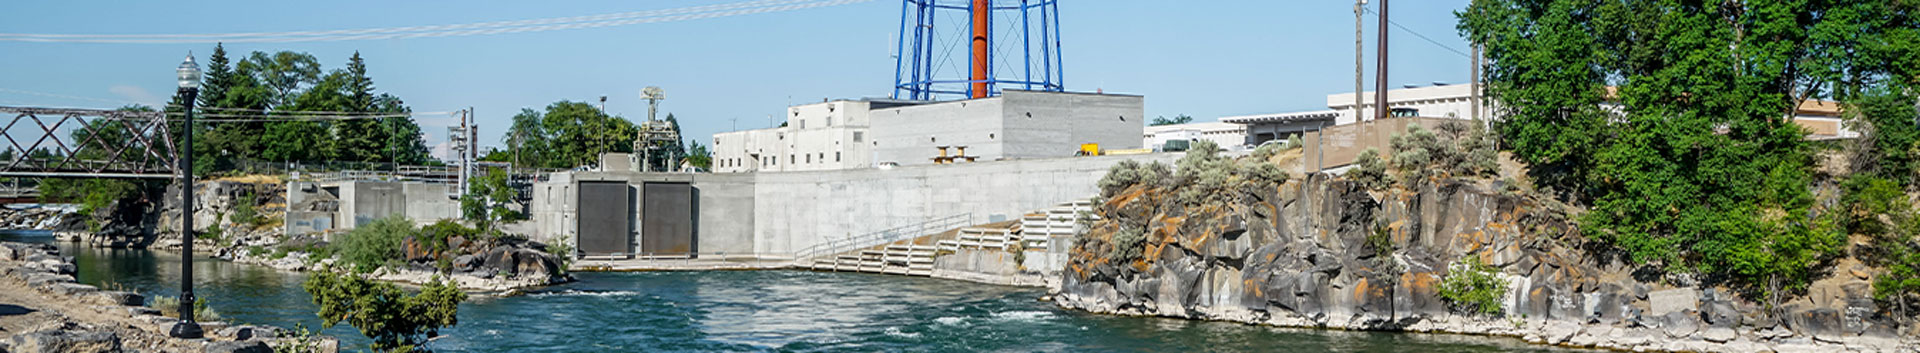 Photo of Idaho Falls Power Plant